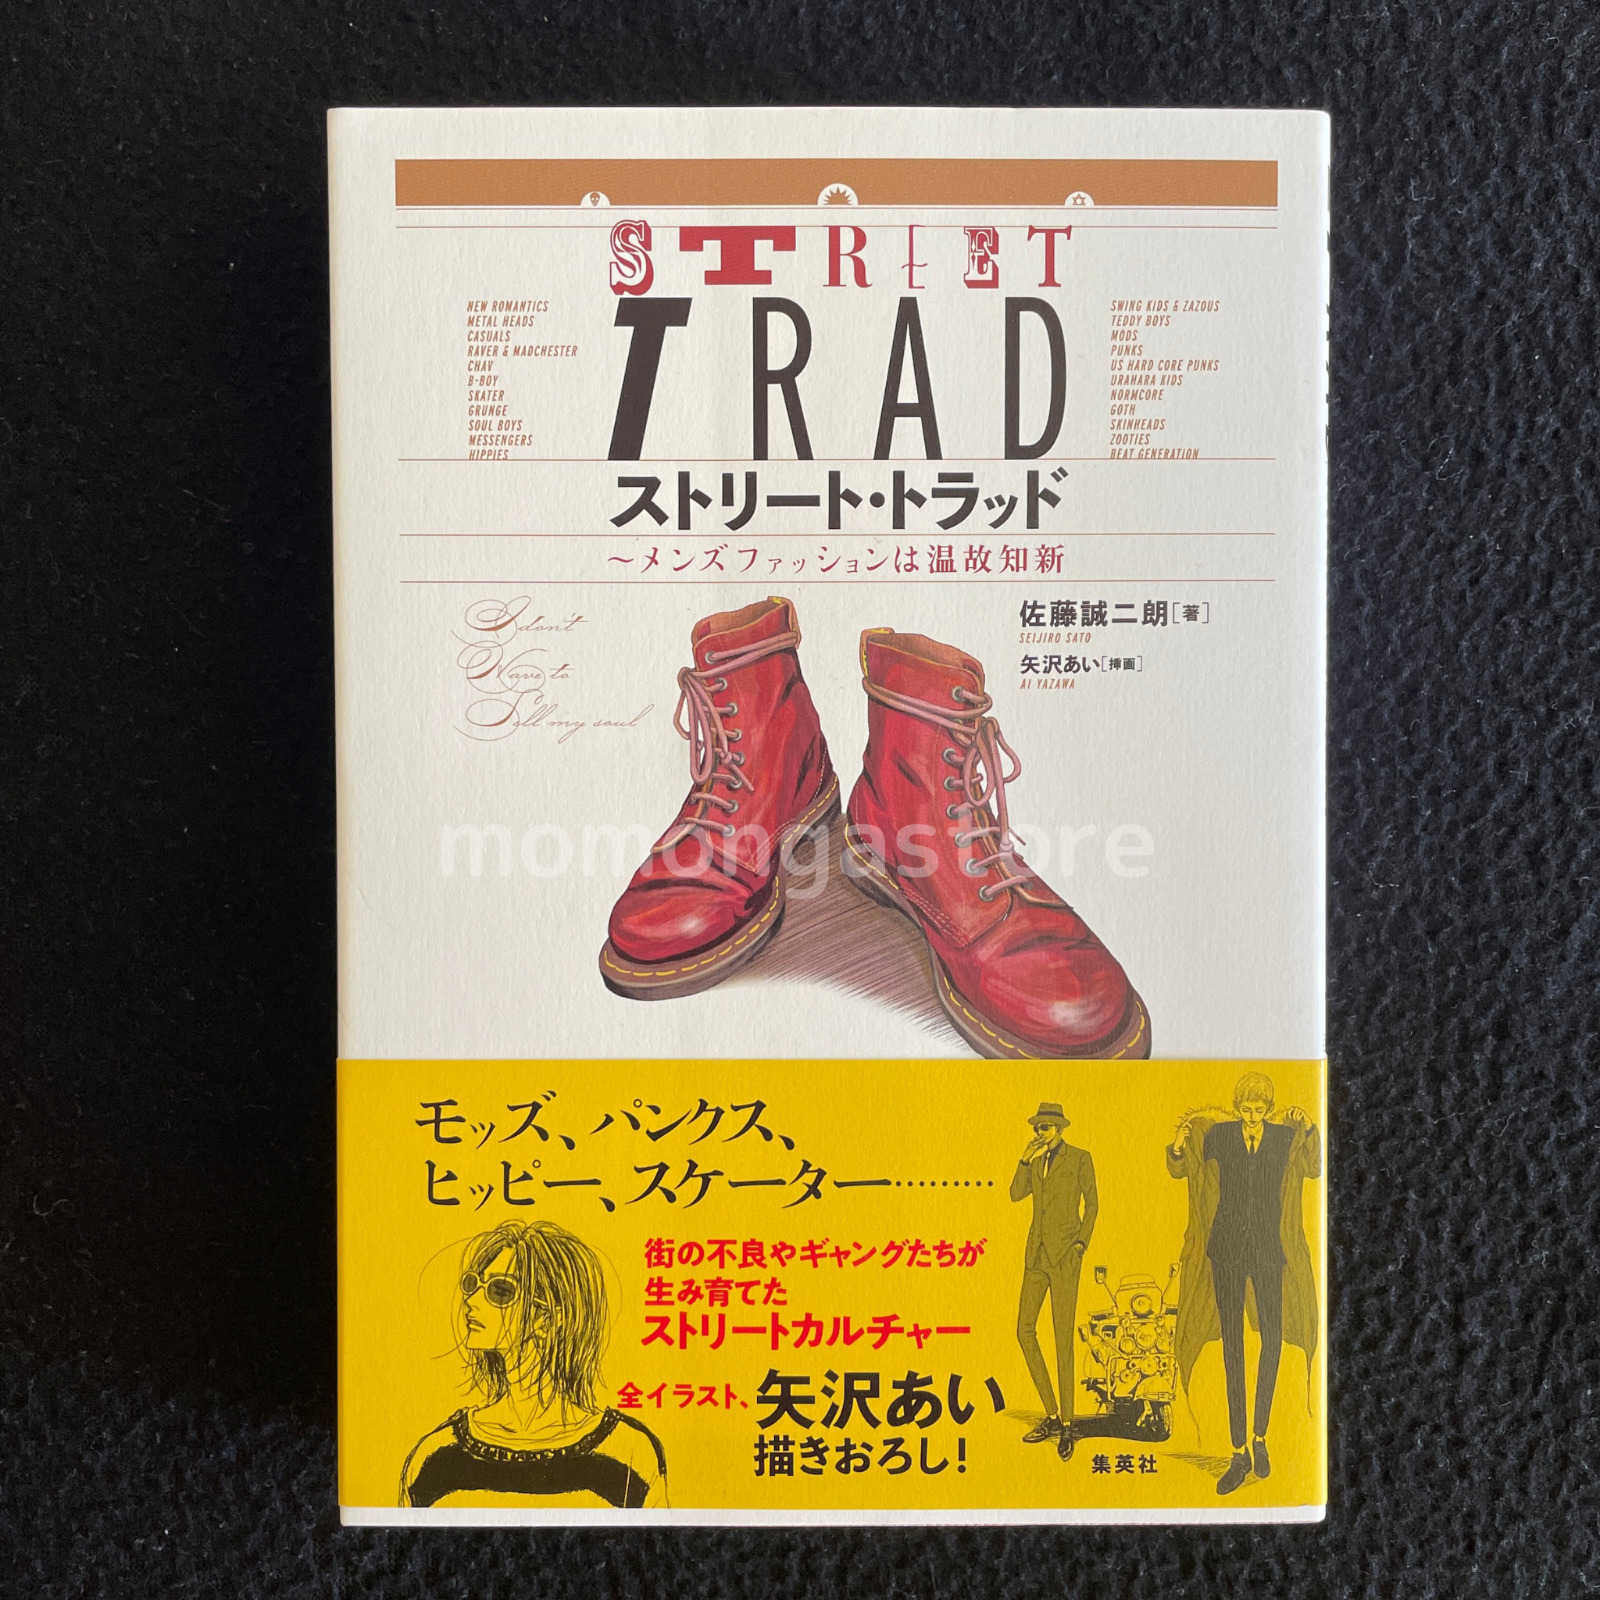 Street Trad - Men's Fashion Art Guide Book From Japan Ai Yazawa